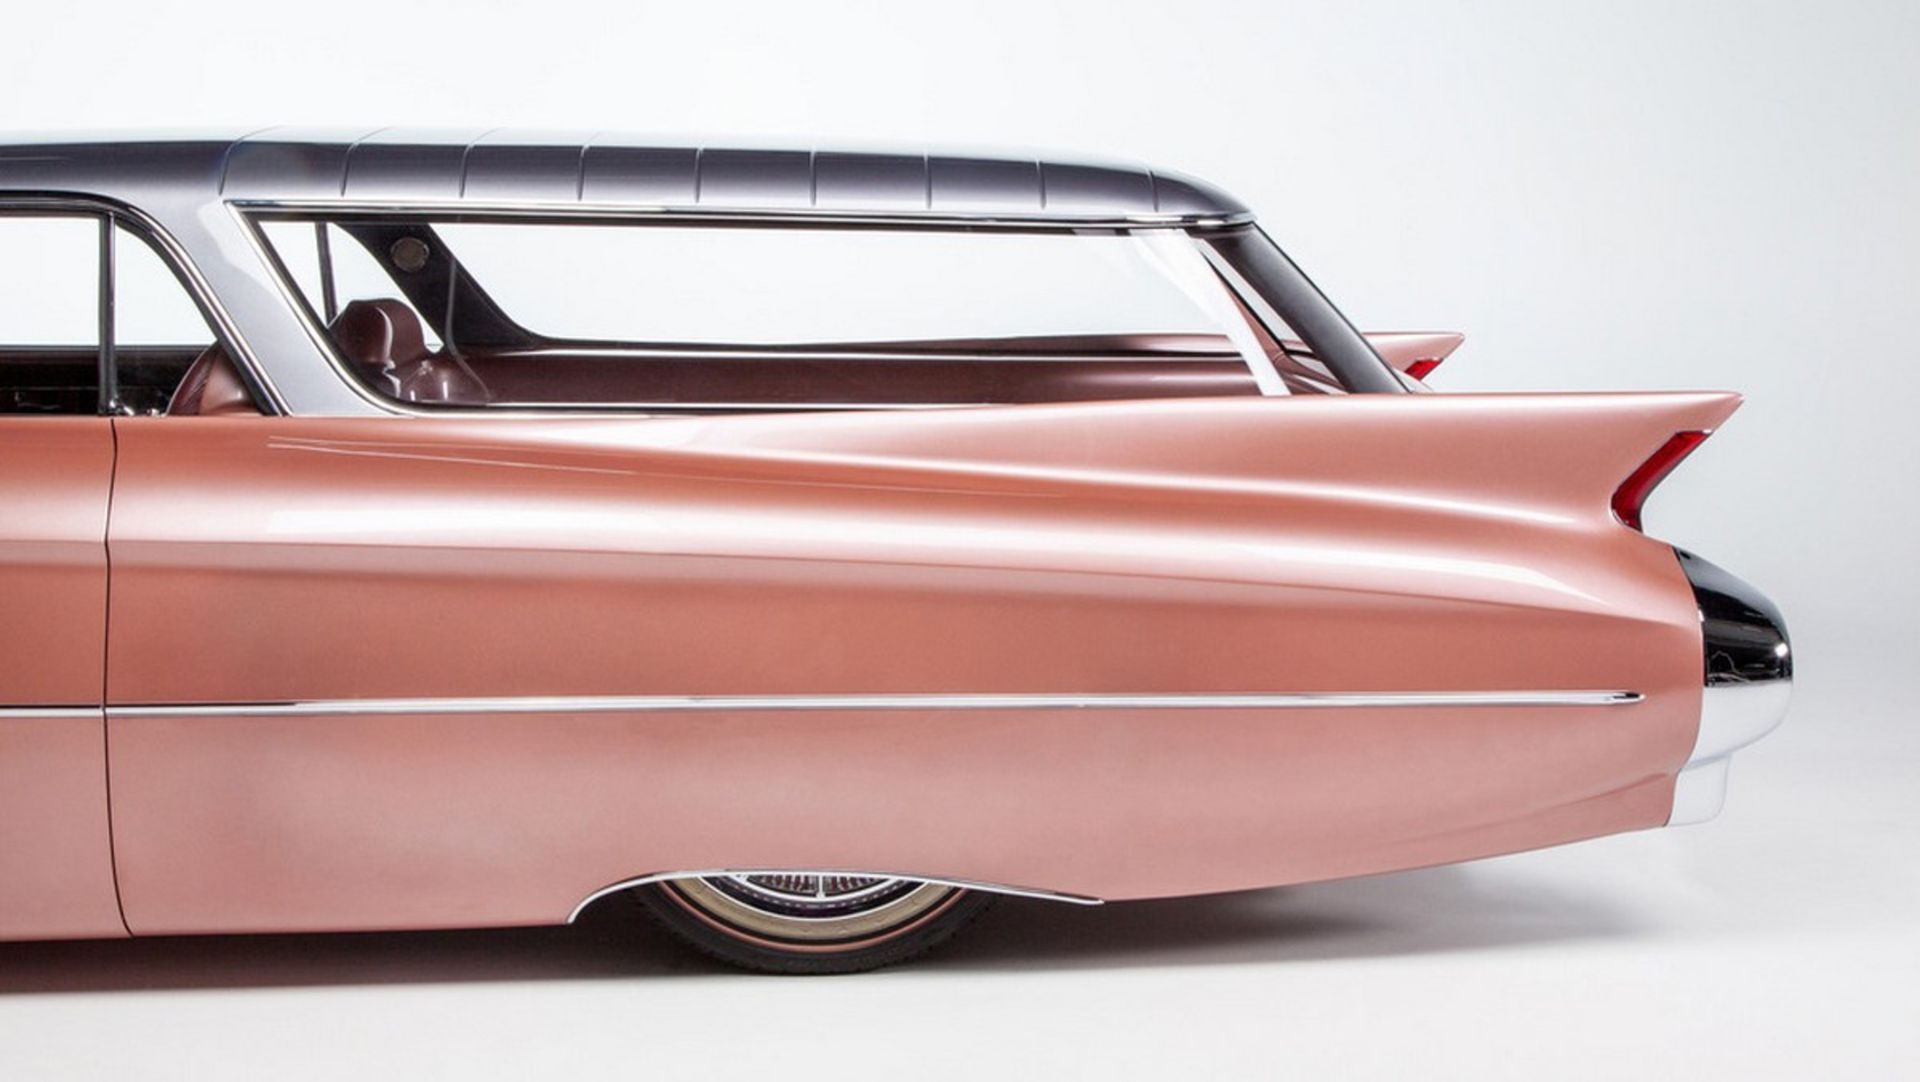 CadMad custom 1959 Cadillac Eldorado Brougham